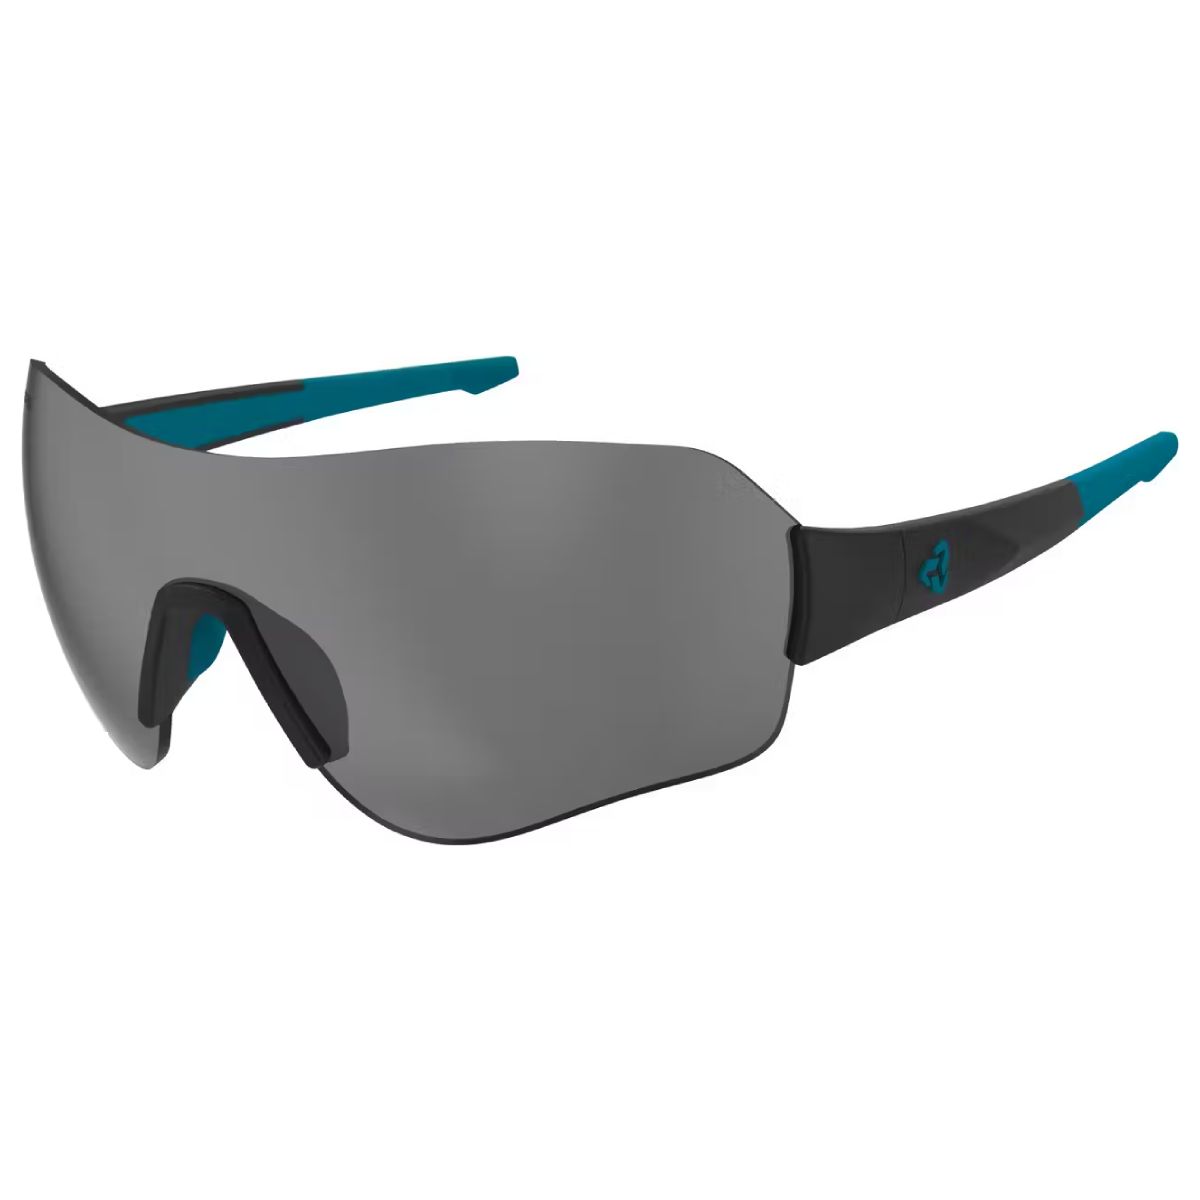 Ryders Eyewear Fitz Sunglasses Matte Black/Blue - Grey Lens